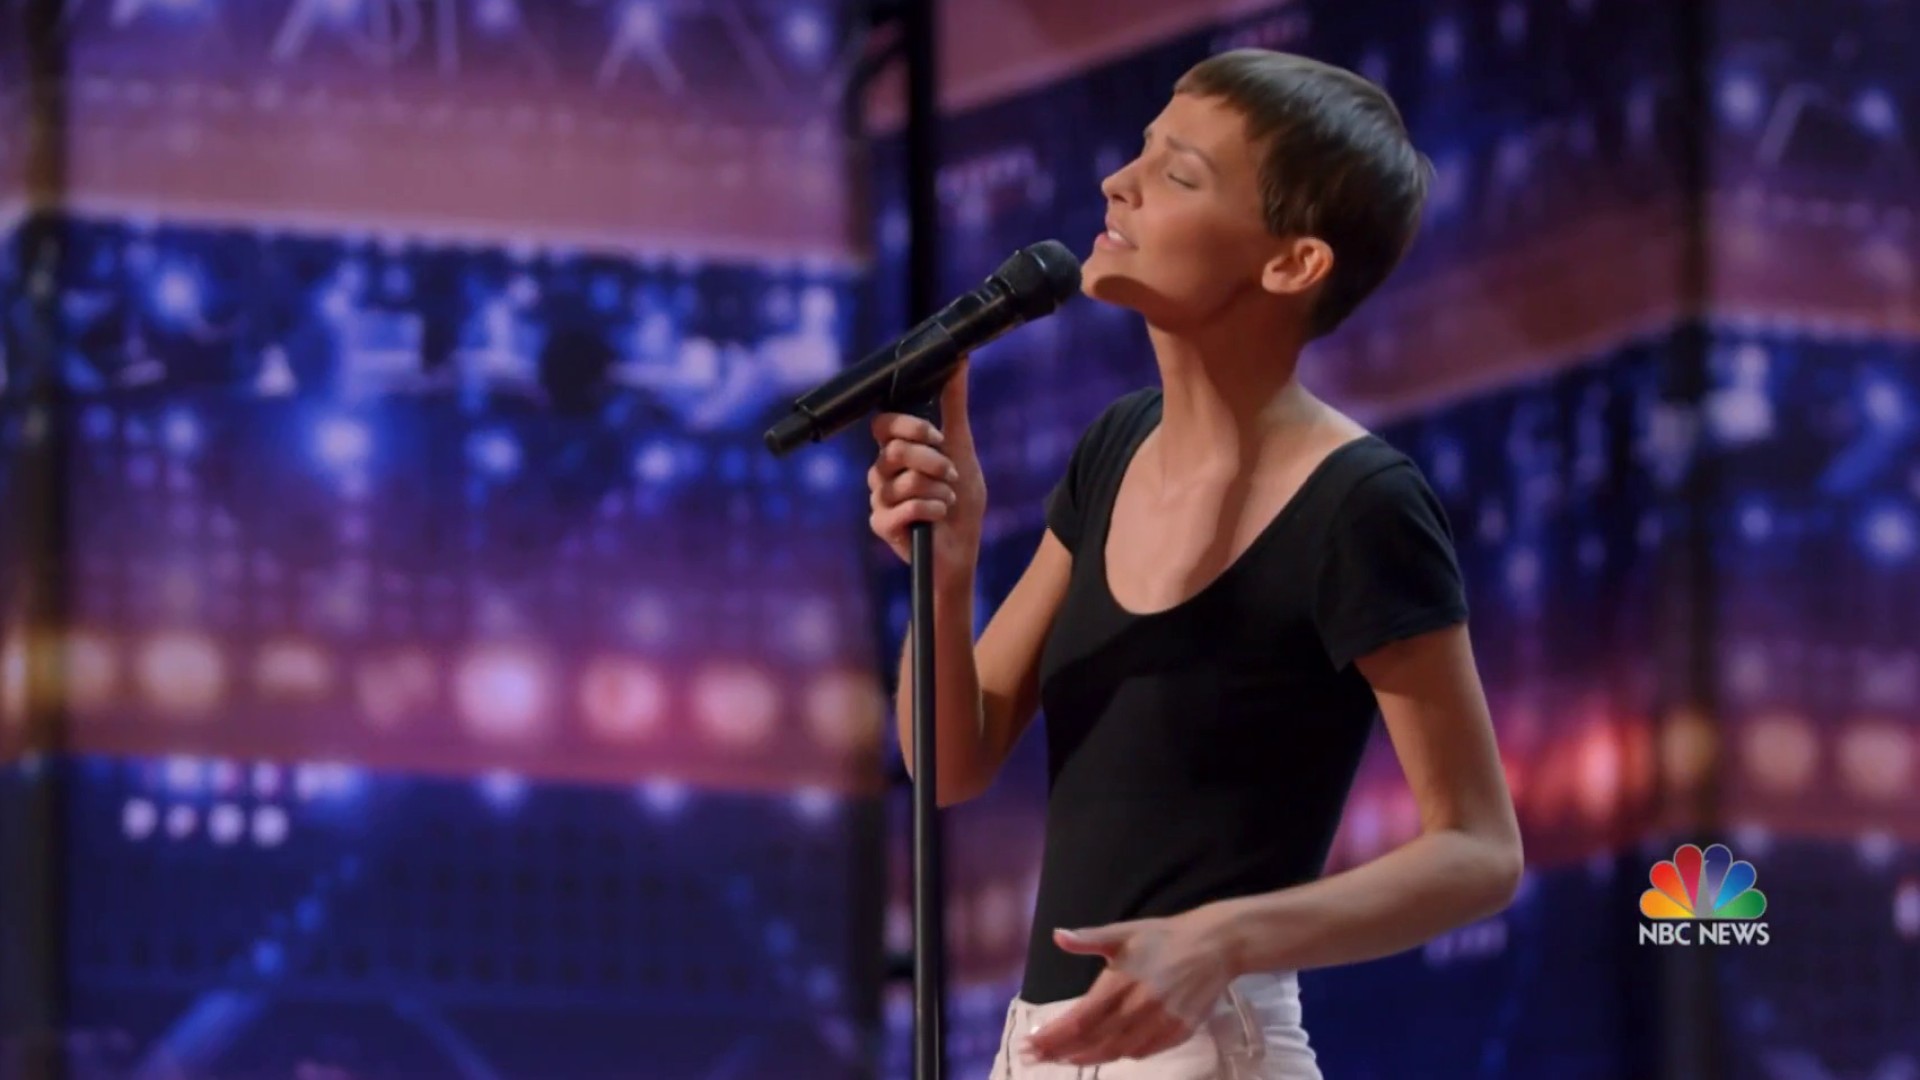 Singer earns America's Got Talent Golden Buzzer with powerful original song